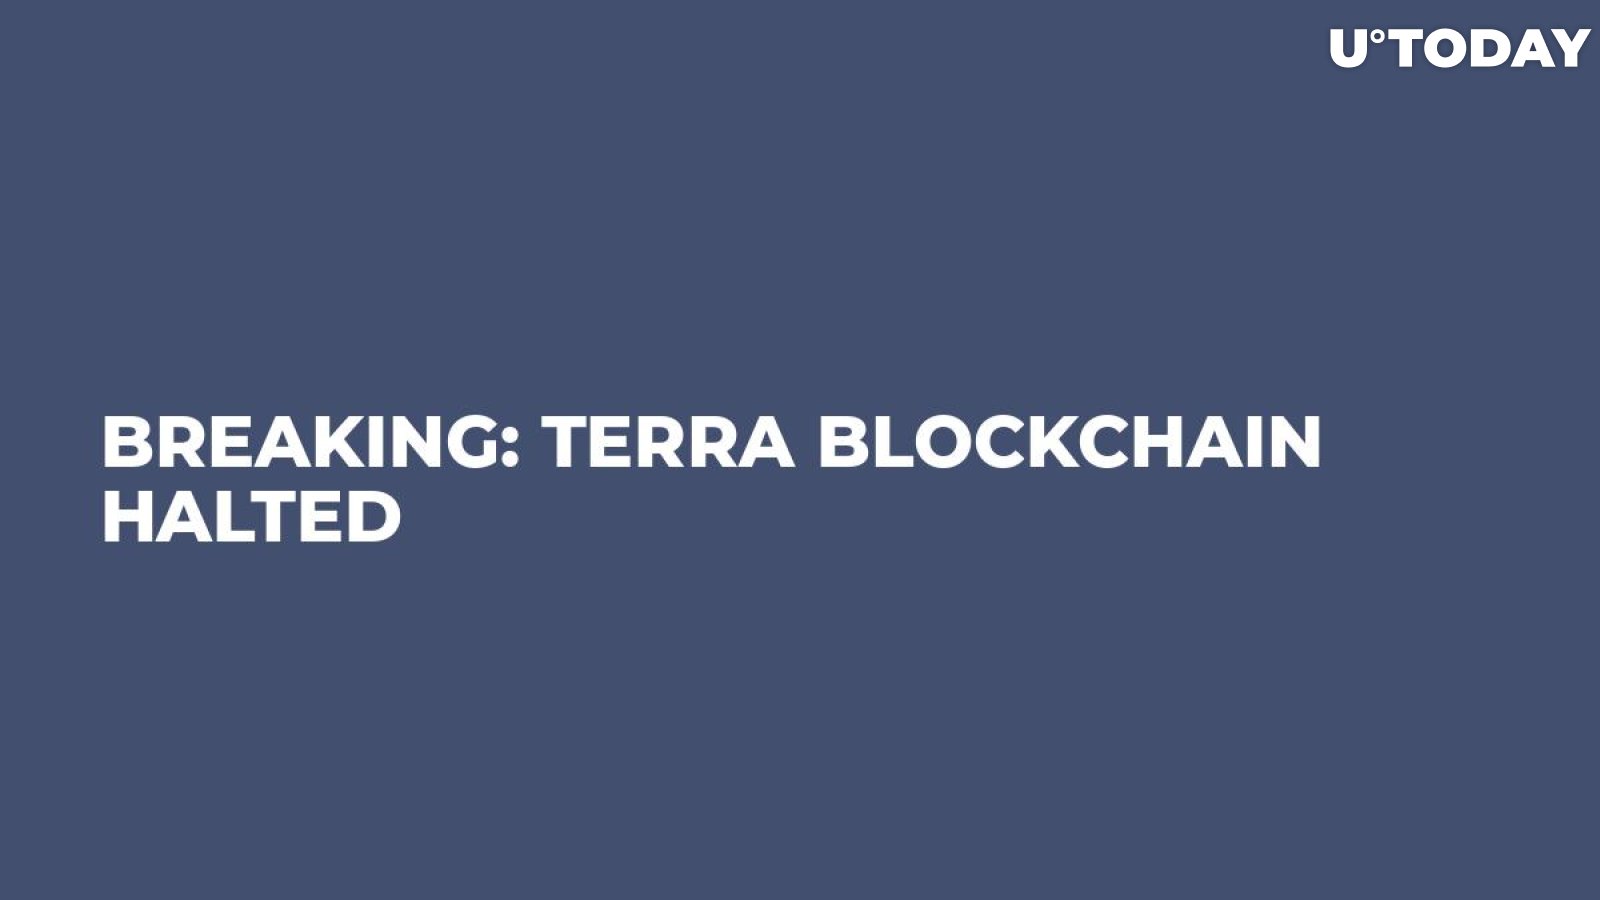 BREAKING: Terra Blockchain Halted